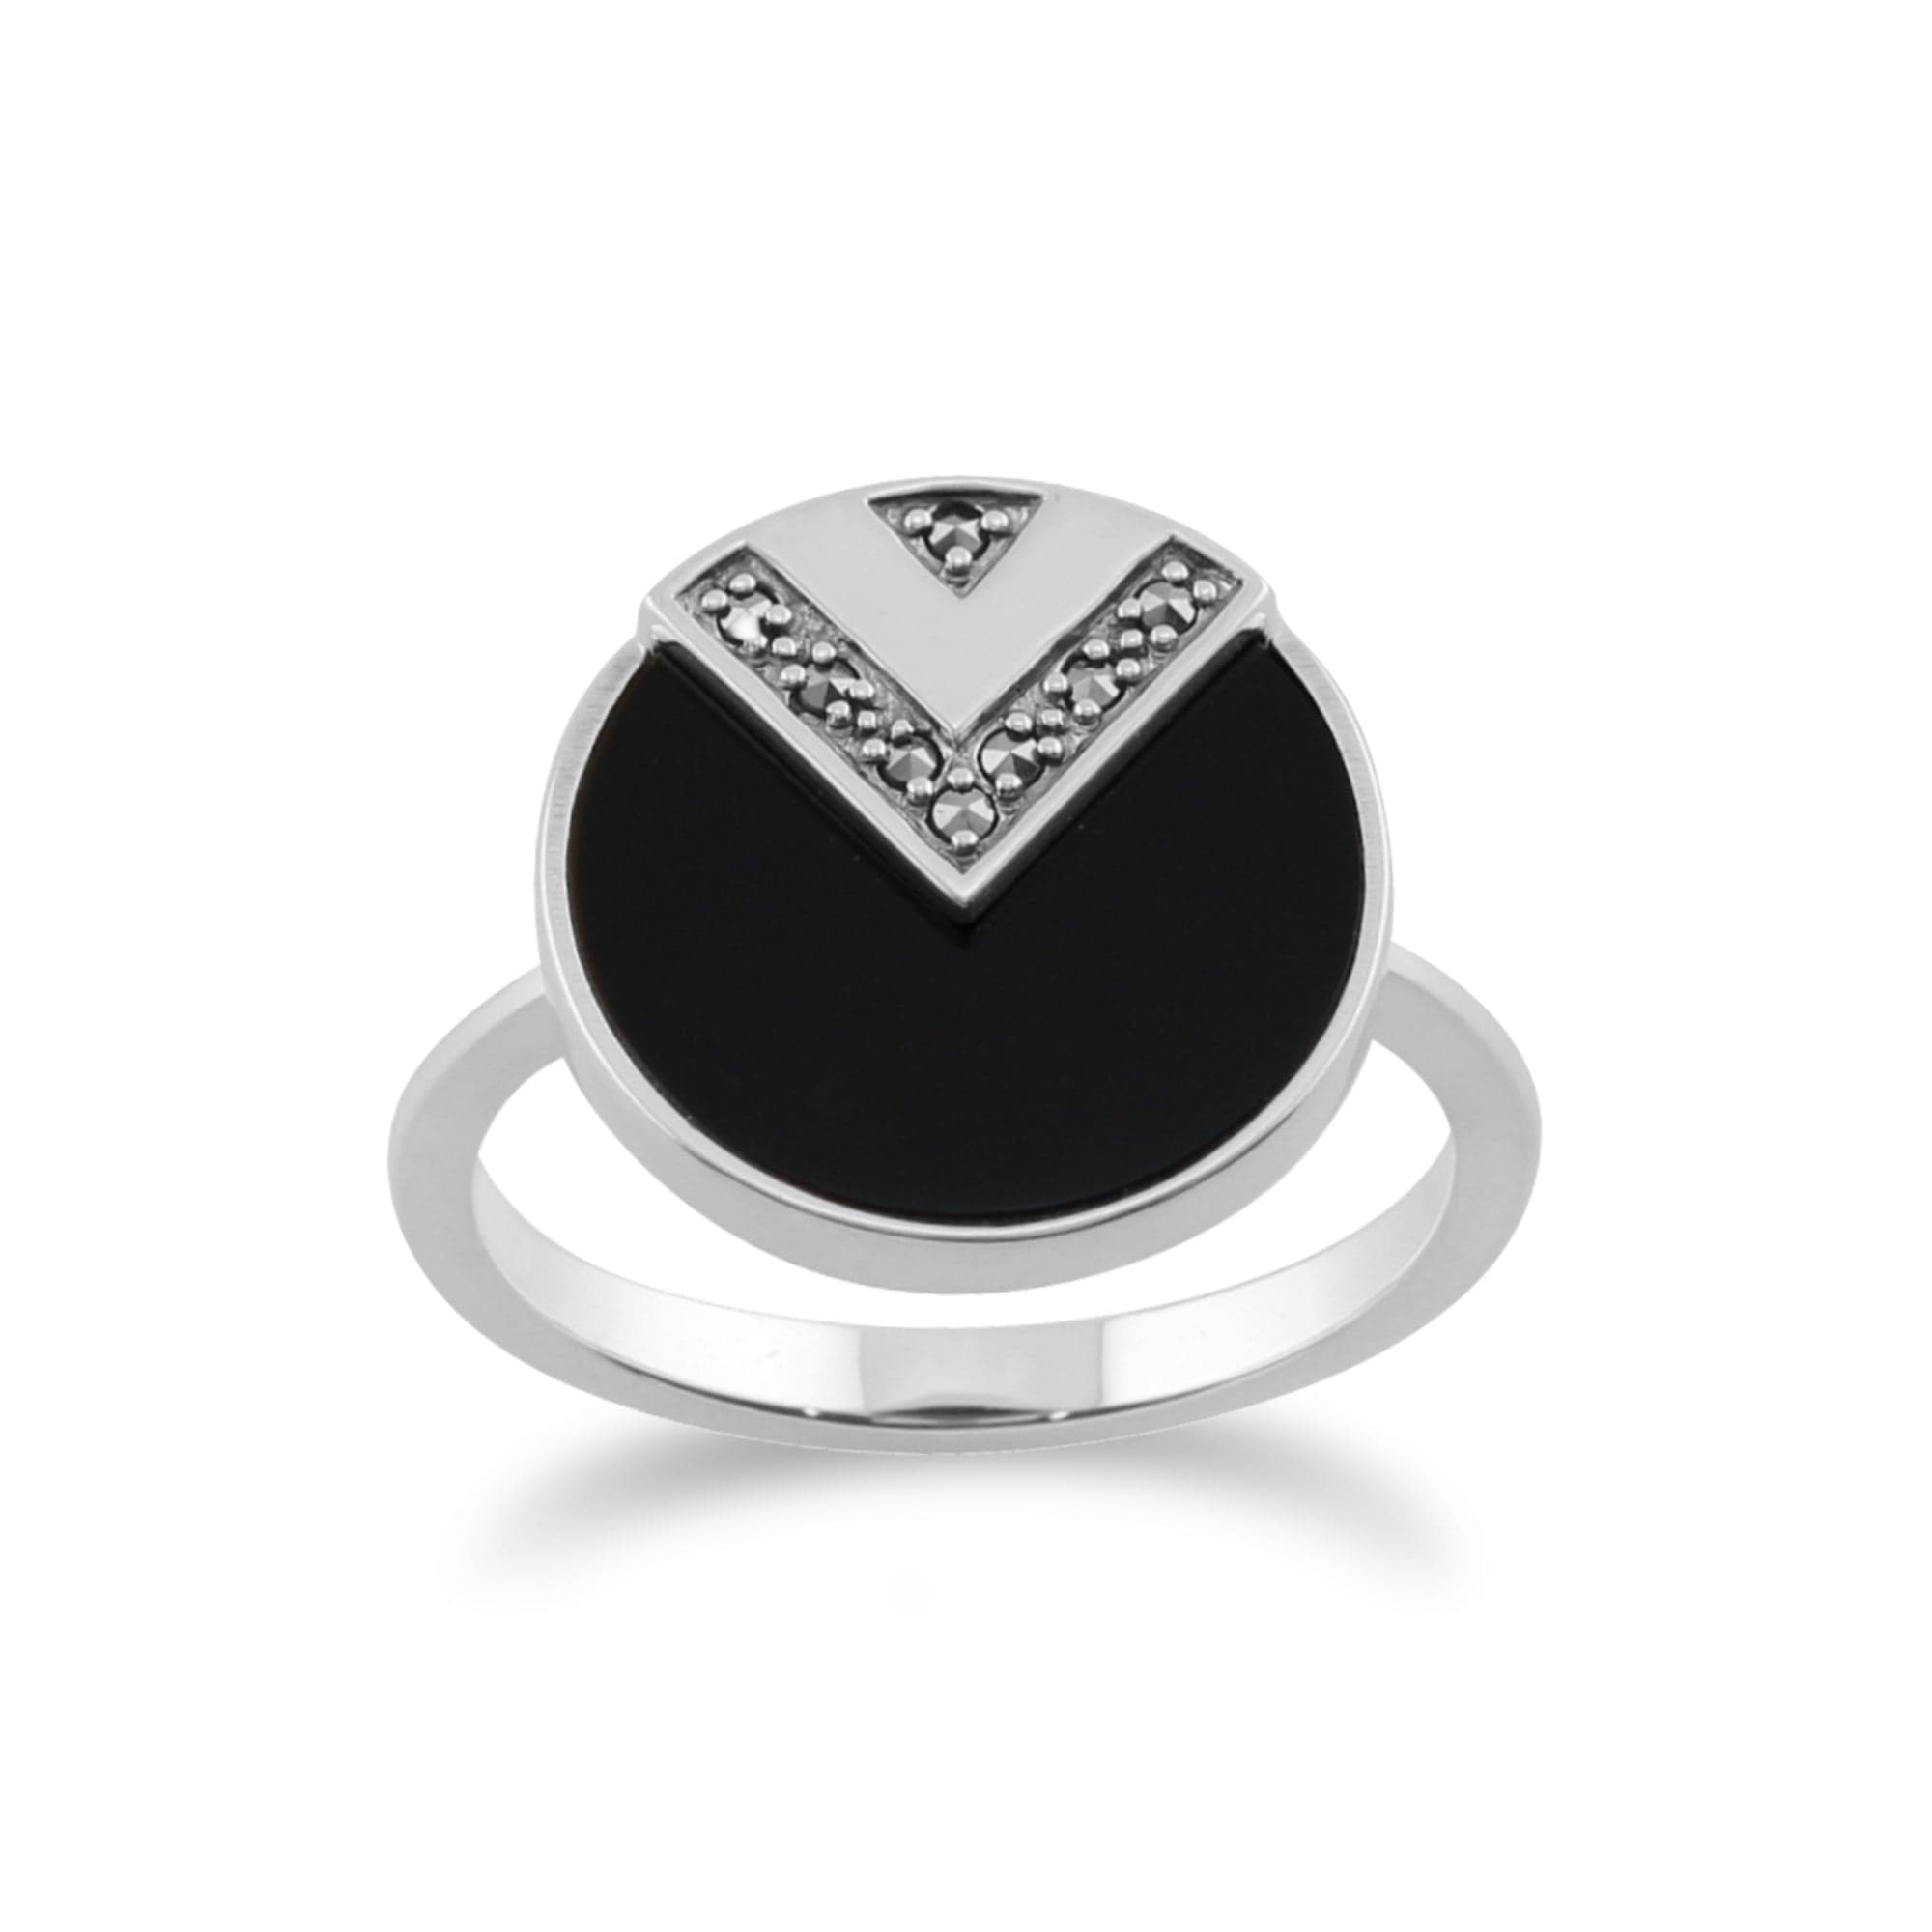 Gemondo 925 Sterling Silver 3ct Black Onyx & Marcasite Art Deco Ring Image 1